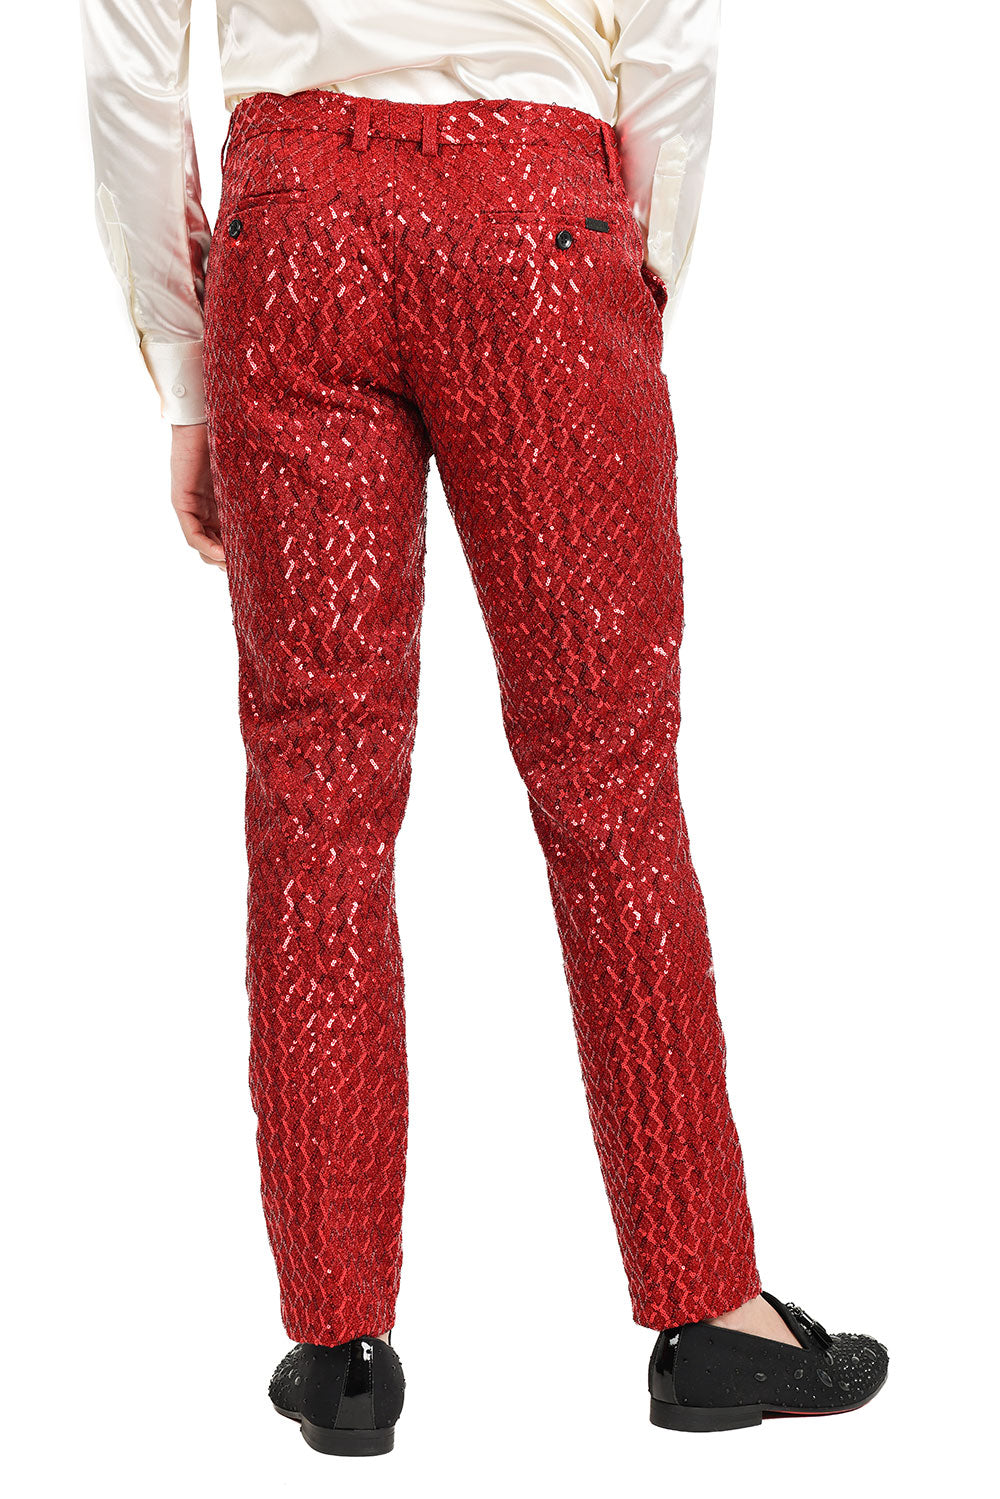 Barabas Men's Sequin Diamond Design Shiny Chino Pants 2CP3099 Red